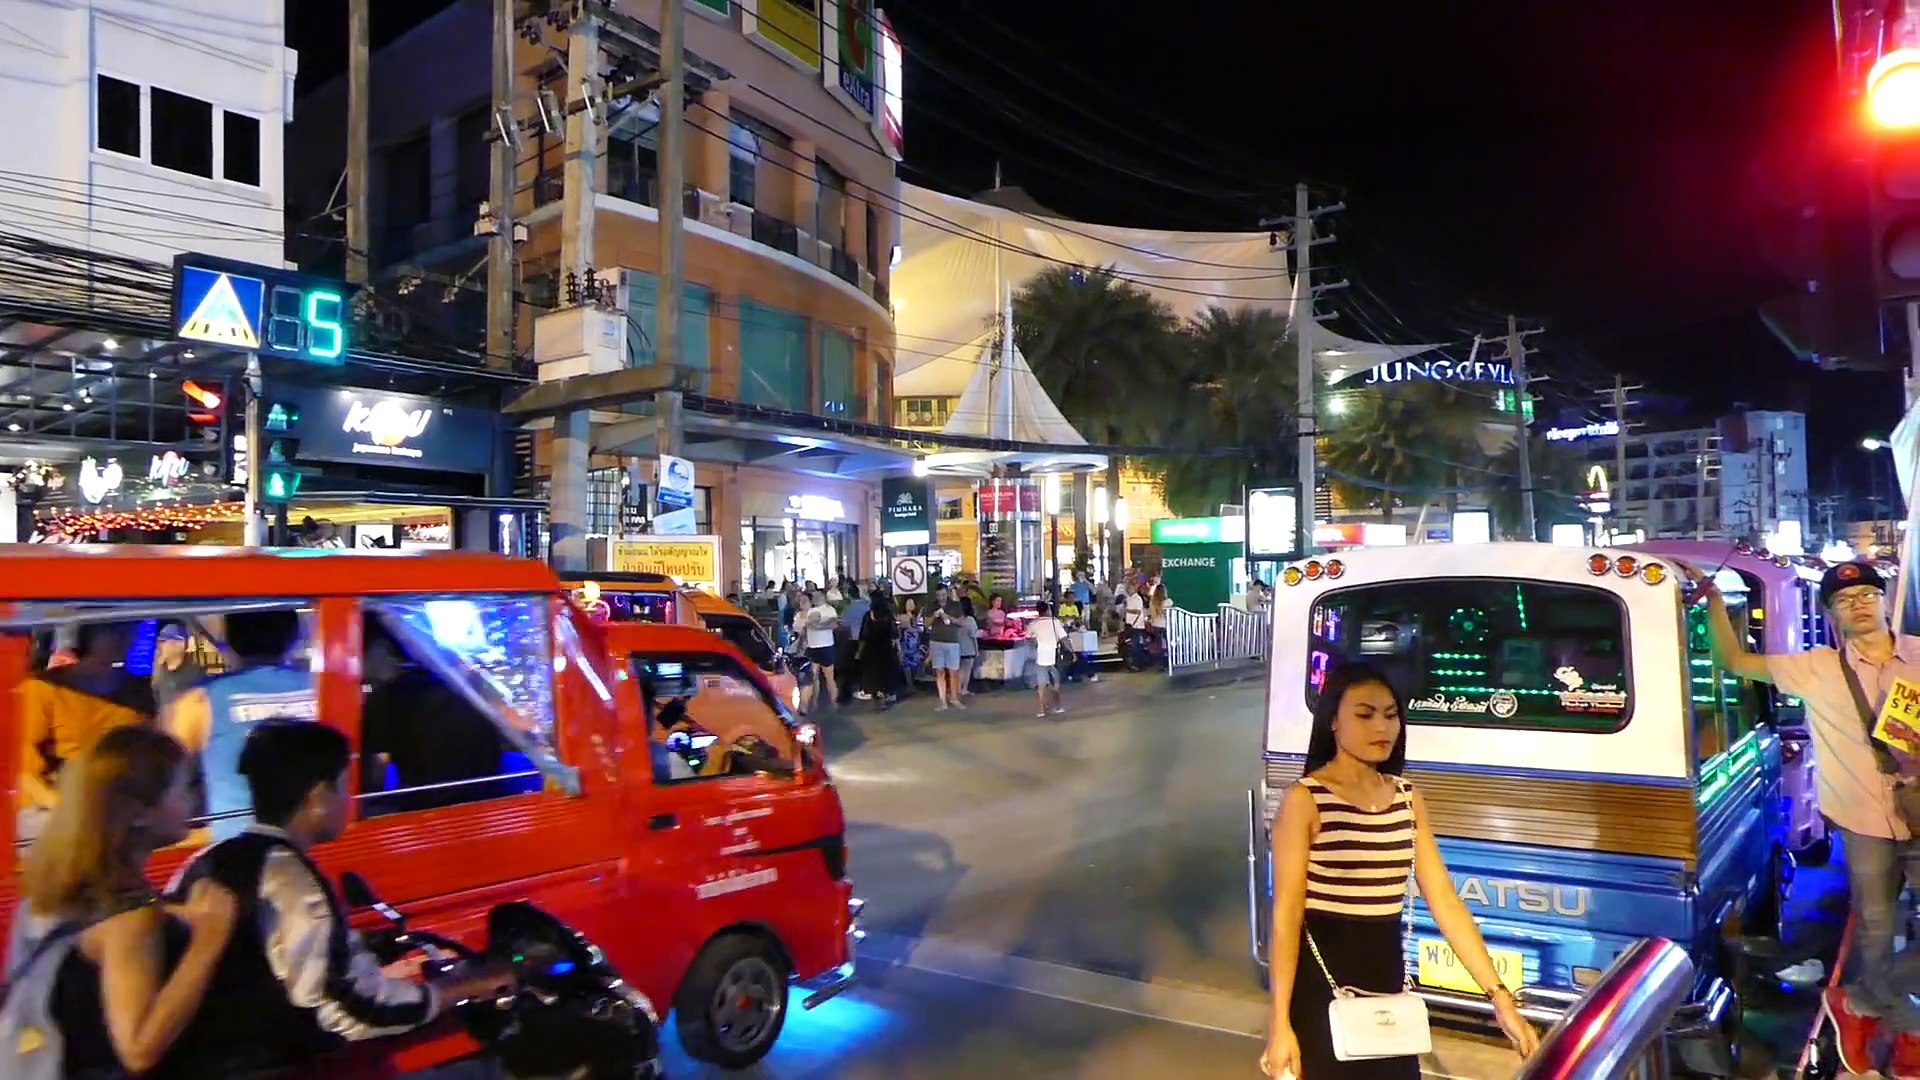 Patong Beach Nightlife - Street Scenes - Bangla Road - Phuket, Thailand 4K  HD - video Dailymotion